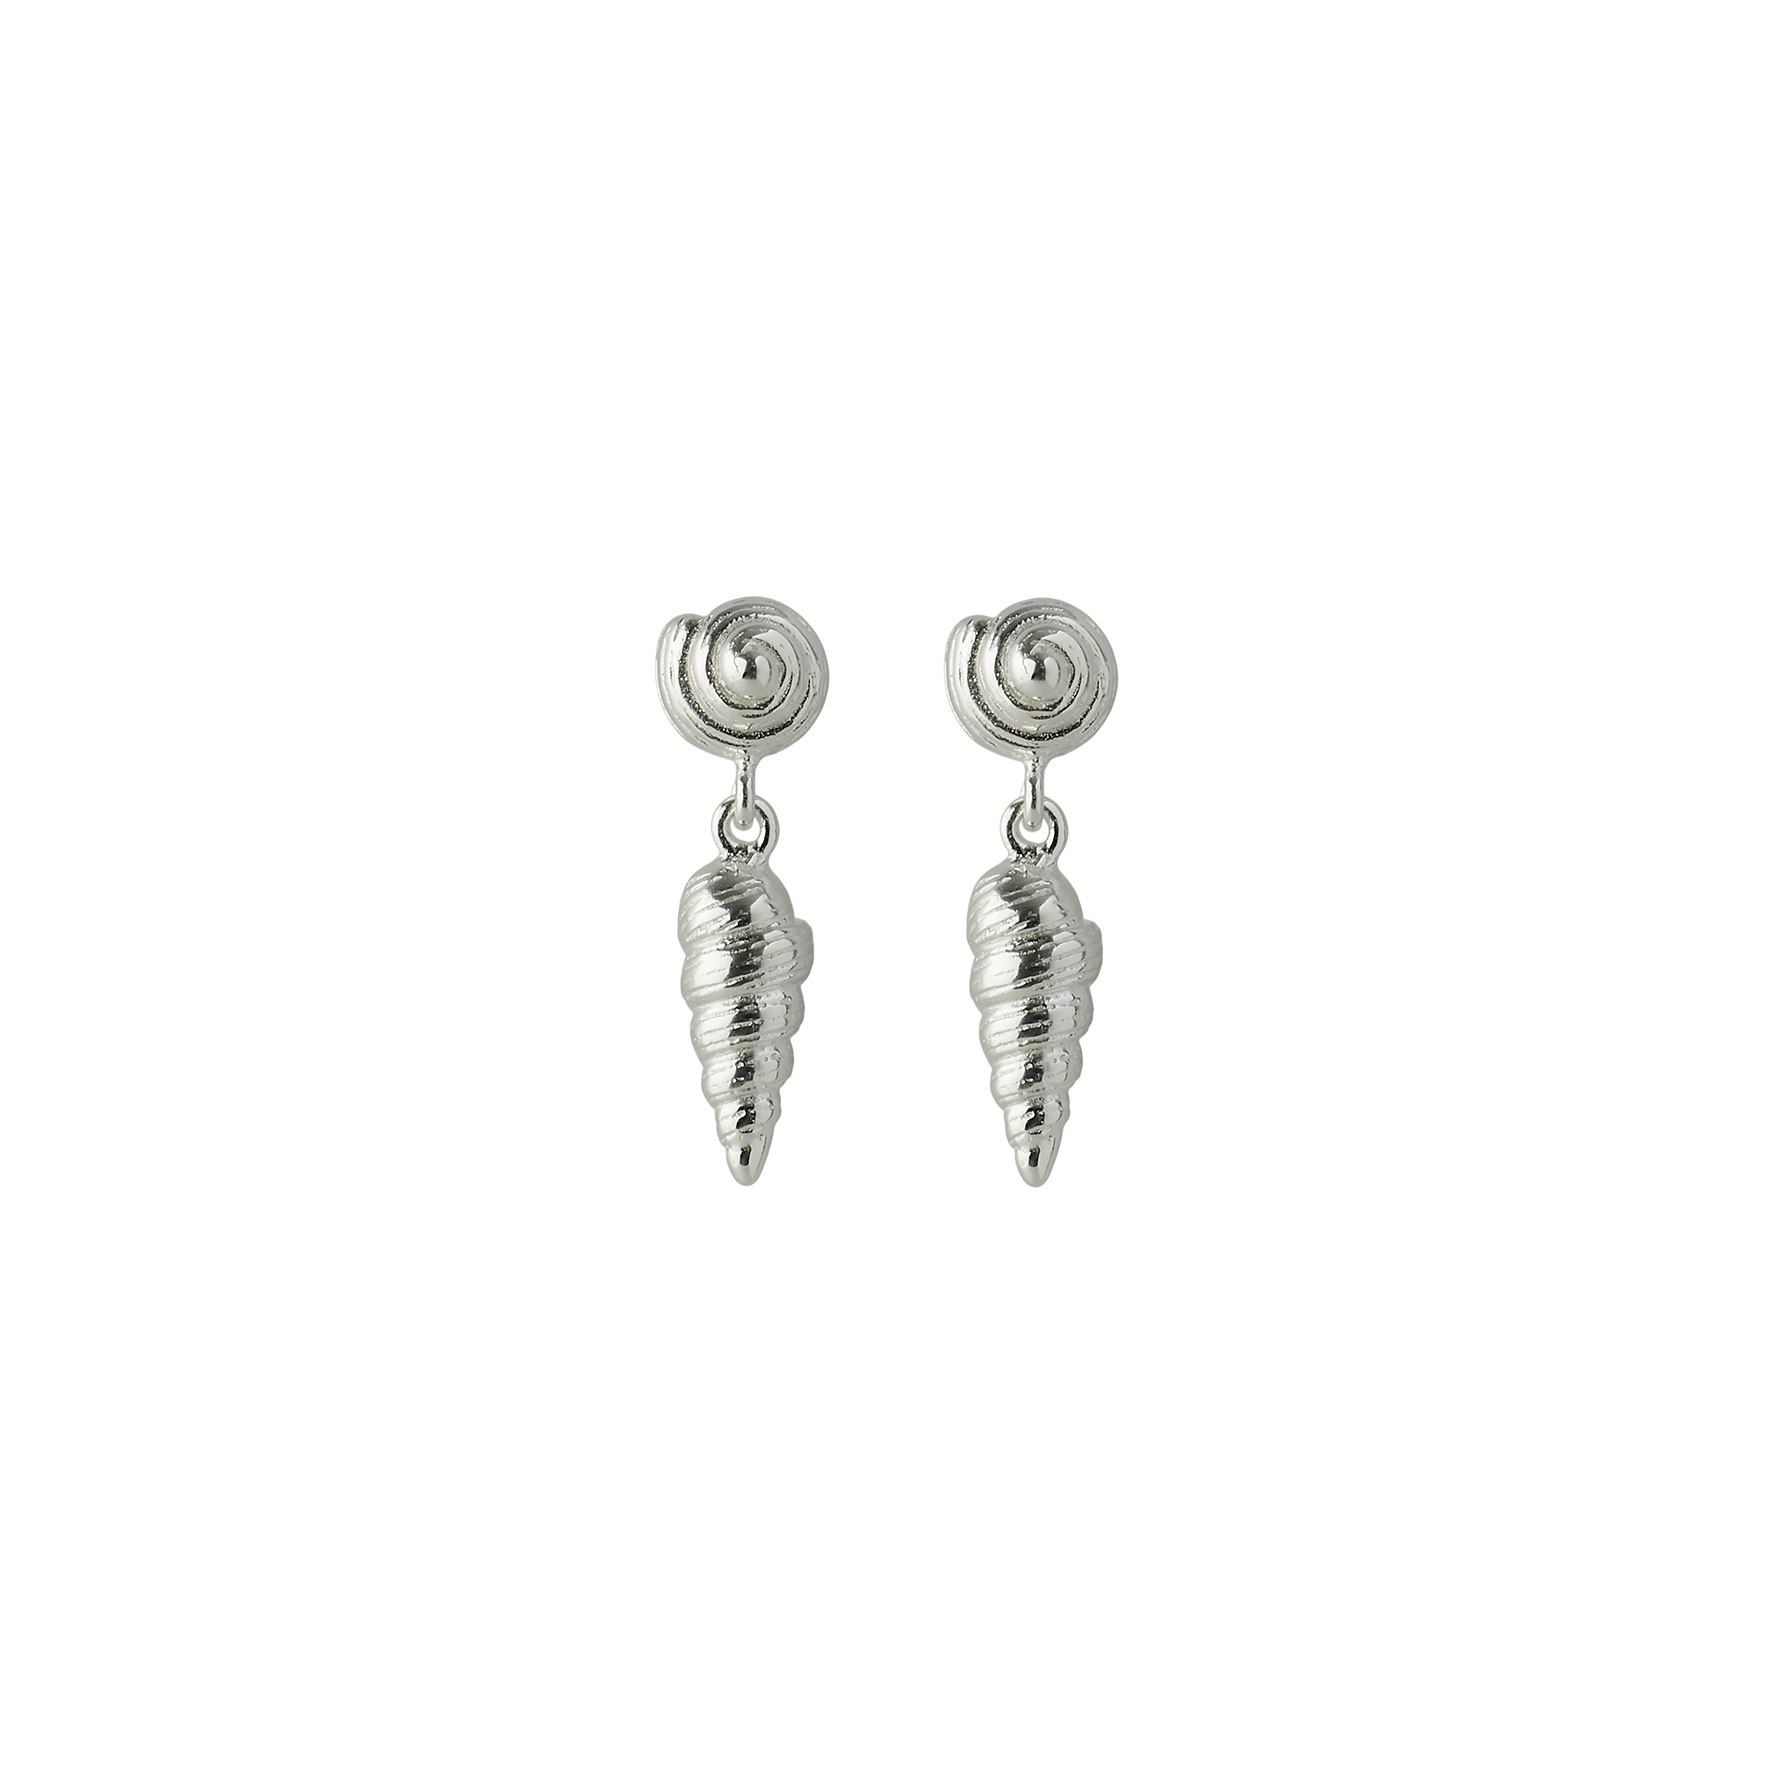 Cocoon Earrings from Pernille Corydon in Silver Sterling 925